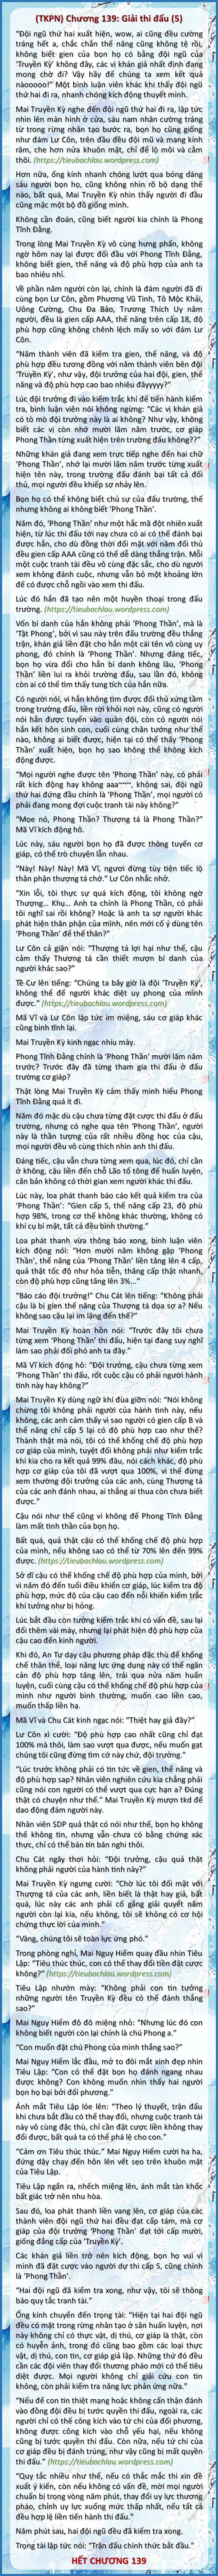 TKPN_C139_Thosiunhon